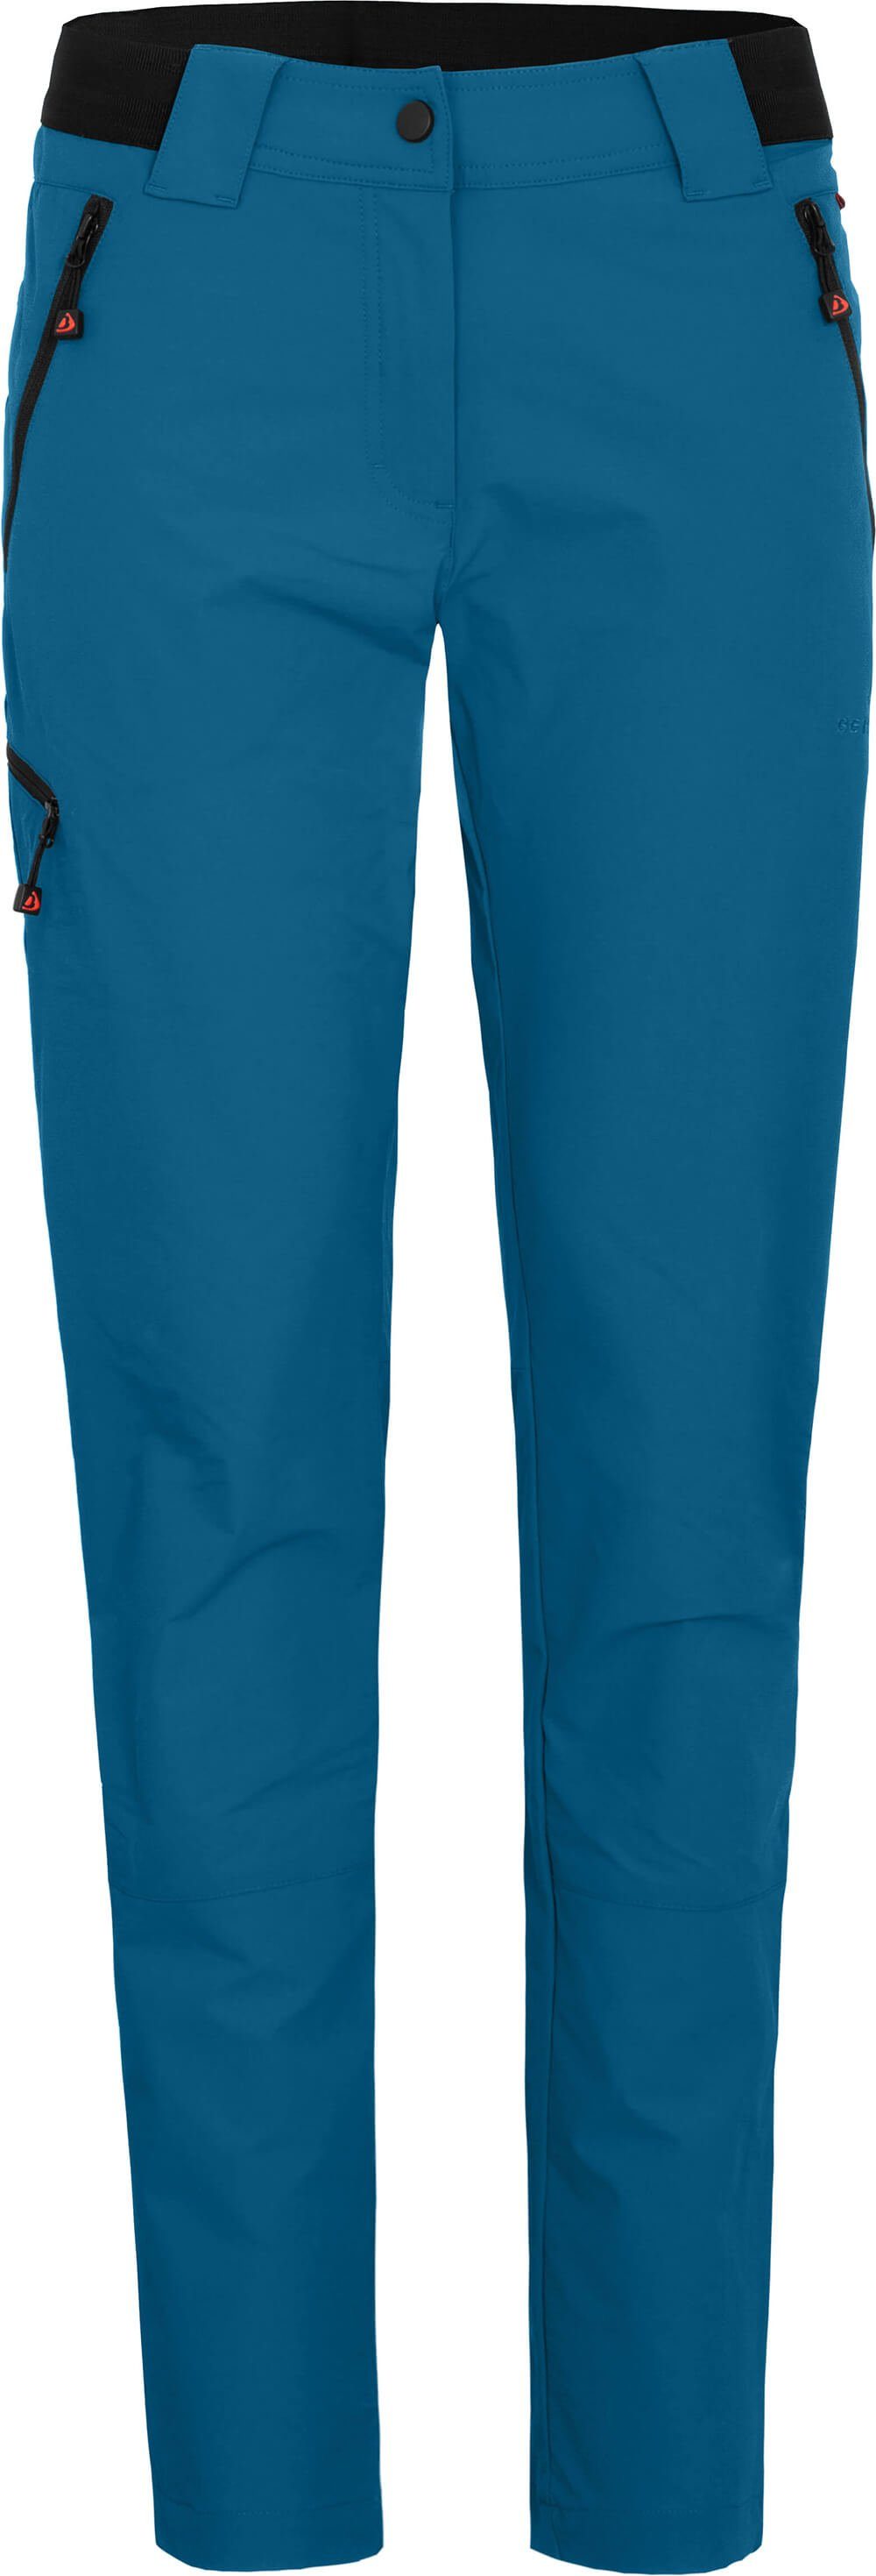 Bergson Outdoorhose VIDAA COMFORT (slim) Damen Wanderhose, leicht, strapazierfähig, Kurzgrößen, Saphir blau | Outdoorhosen